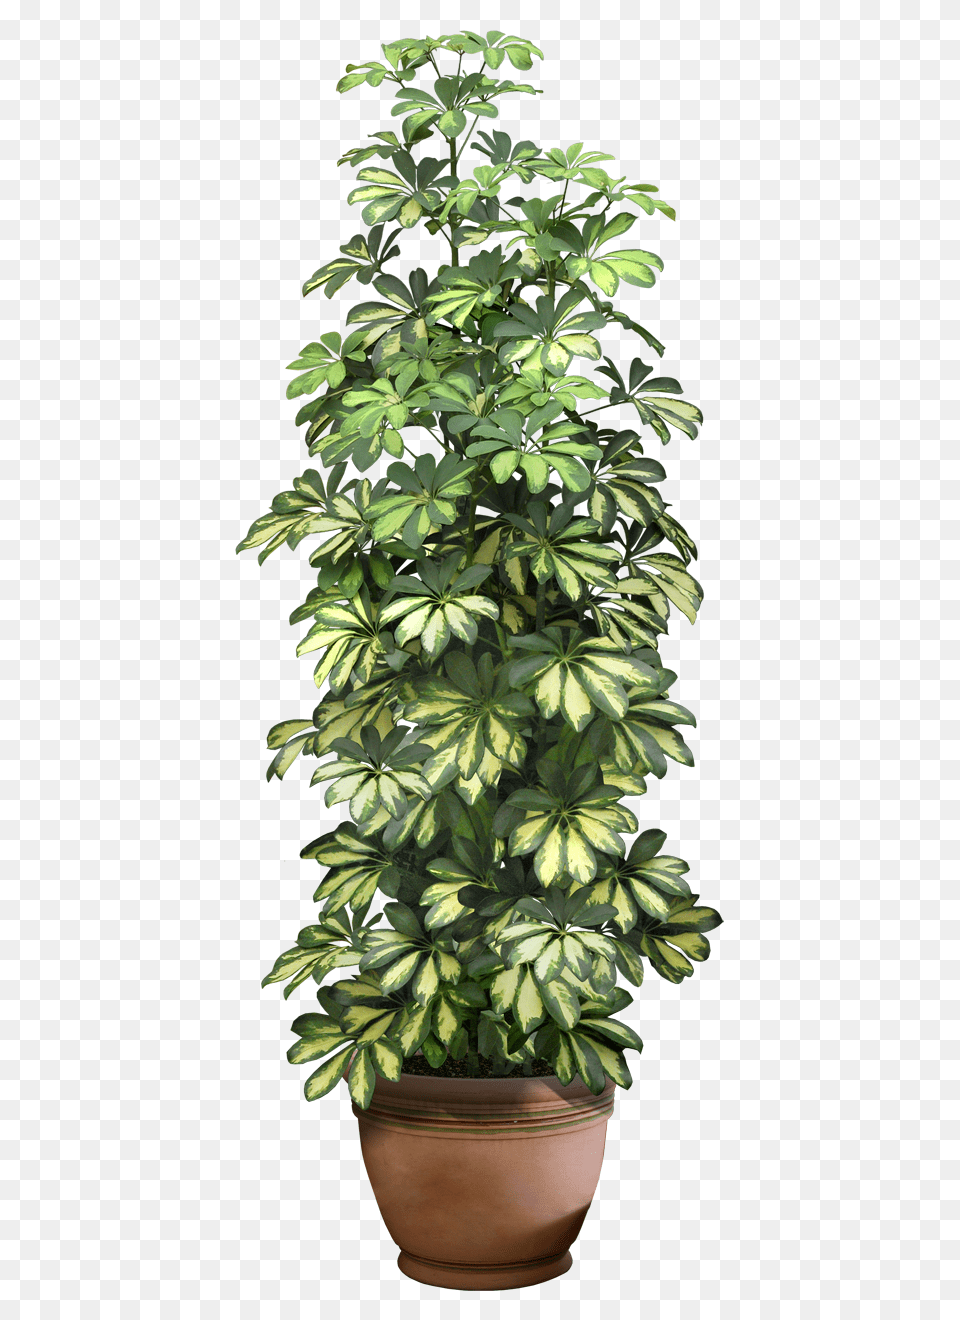 Hd 0 9ddb1 5c7a292c Xxl Pot Plant Transparent Format Flower Pot, Leaf, Potted Plant, Tree, Vegetation Free Png Download